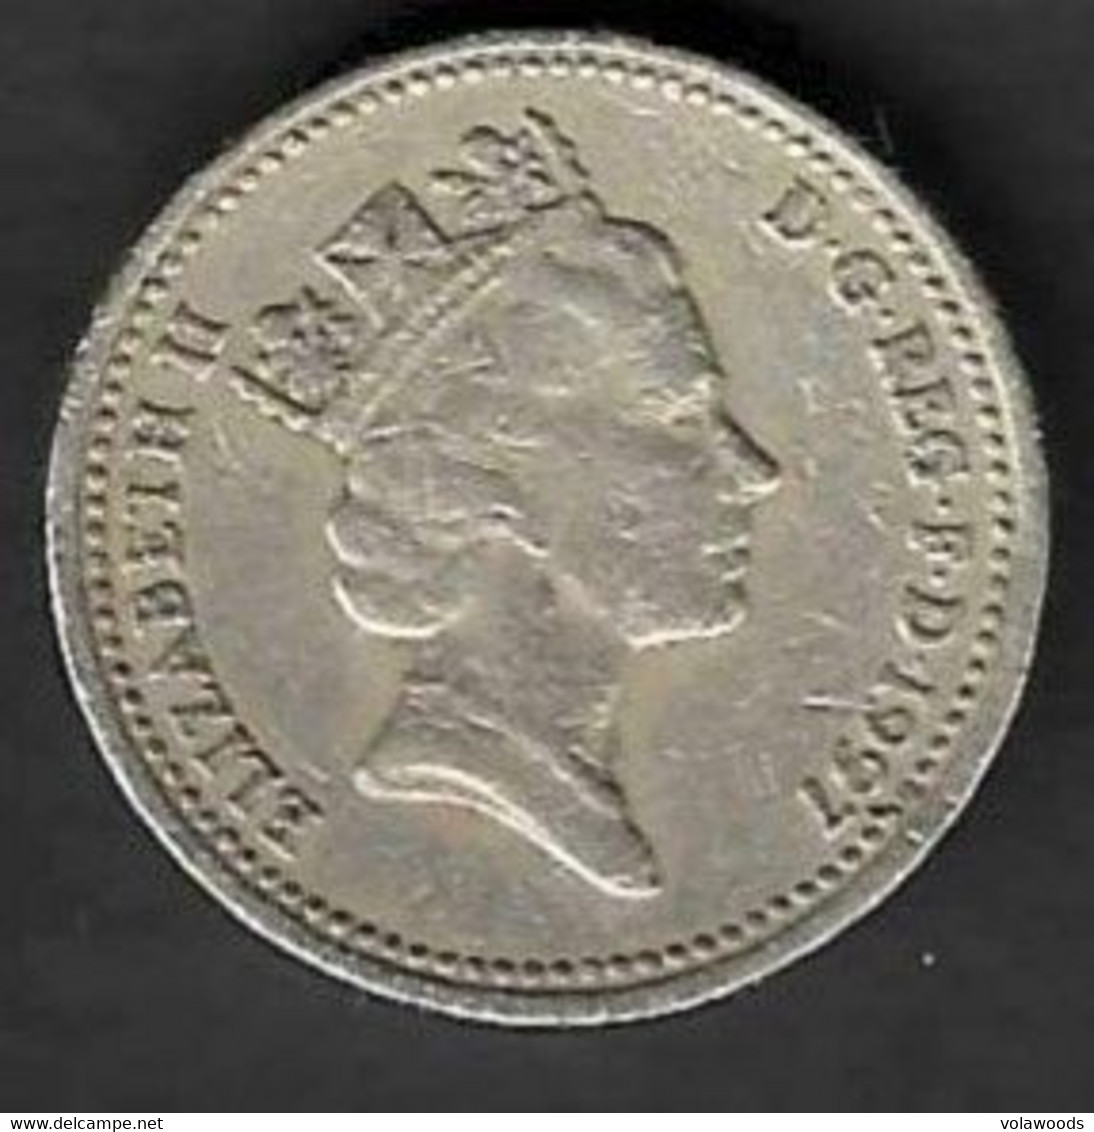 Regno Unito - Moneta Circolata Da 1 Pound "Three Lions Of England" Km975 - 1997 - 1 Pound